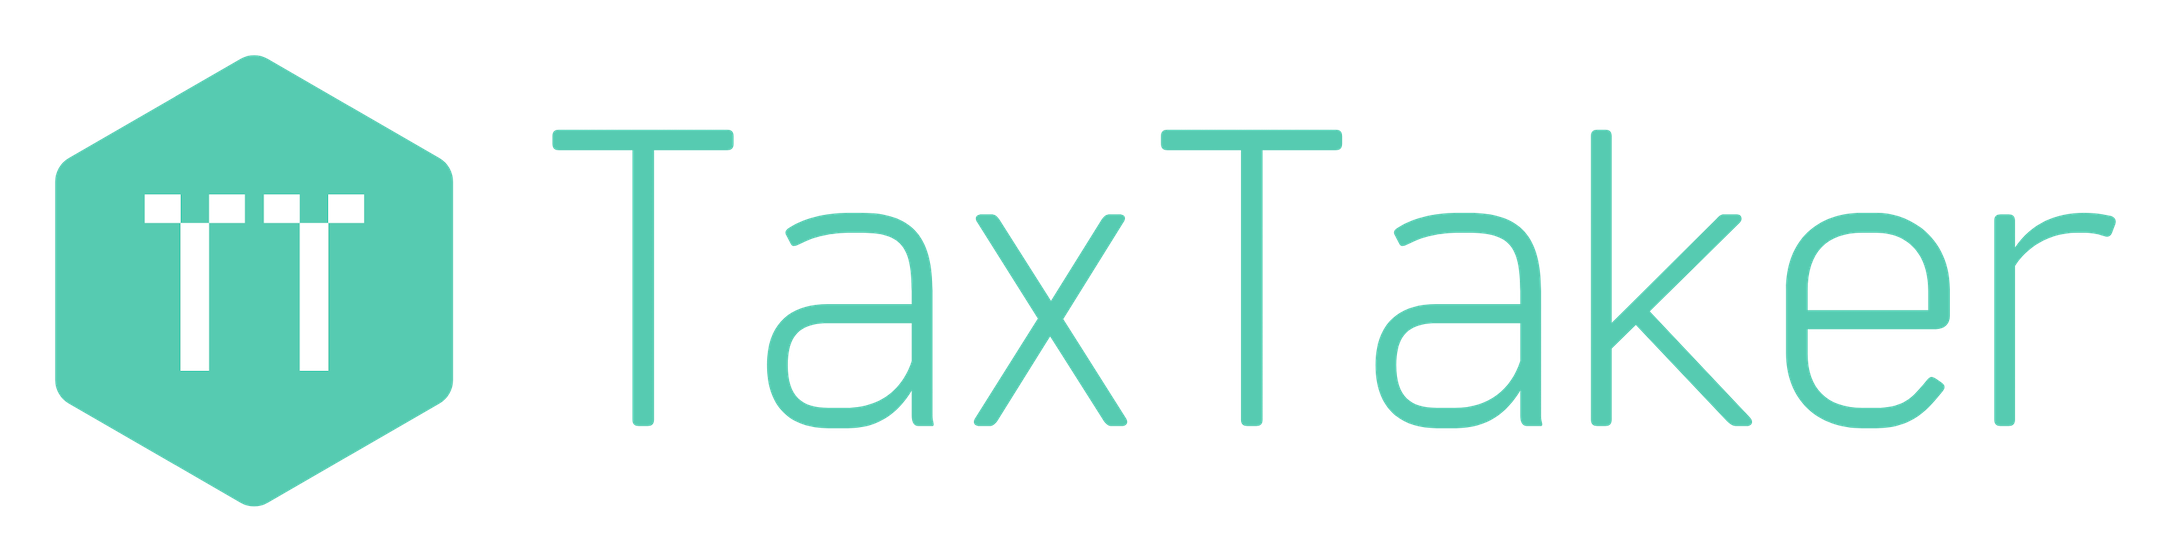 TaxTaker logo copy